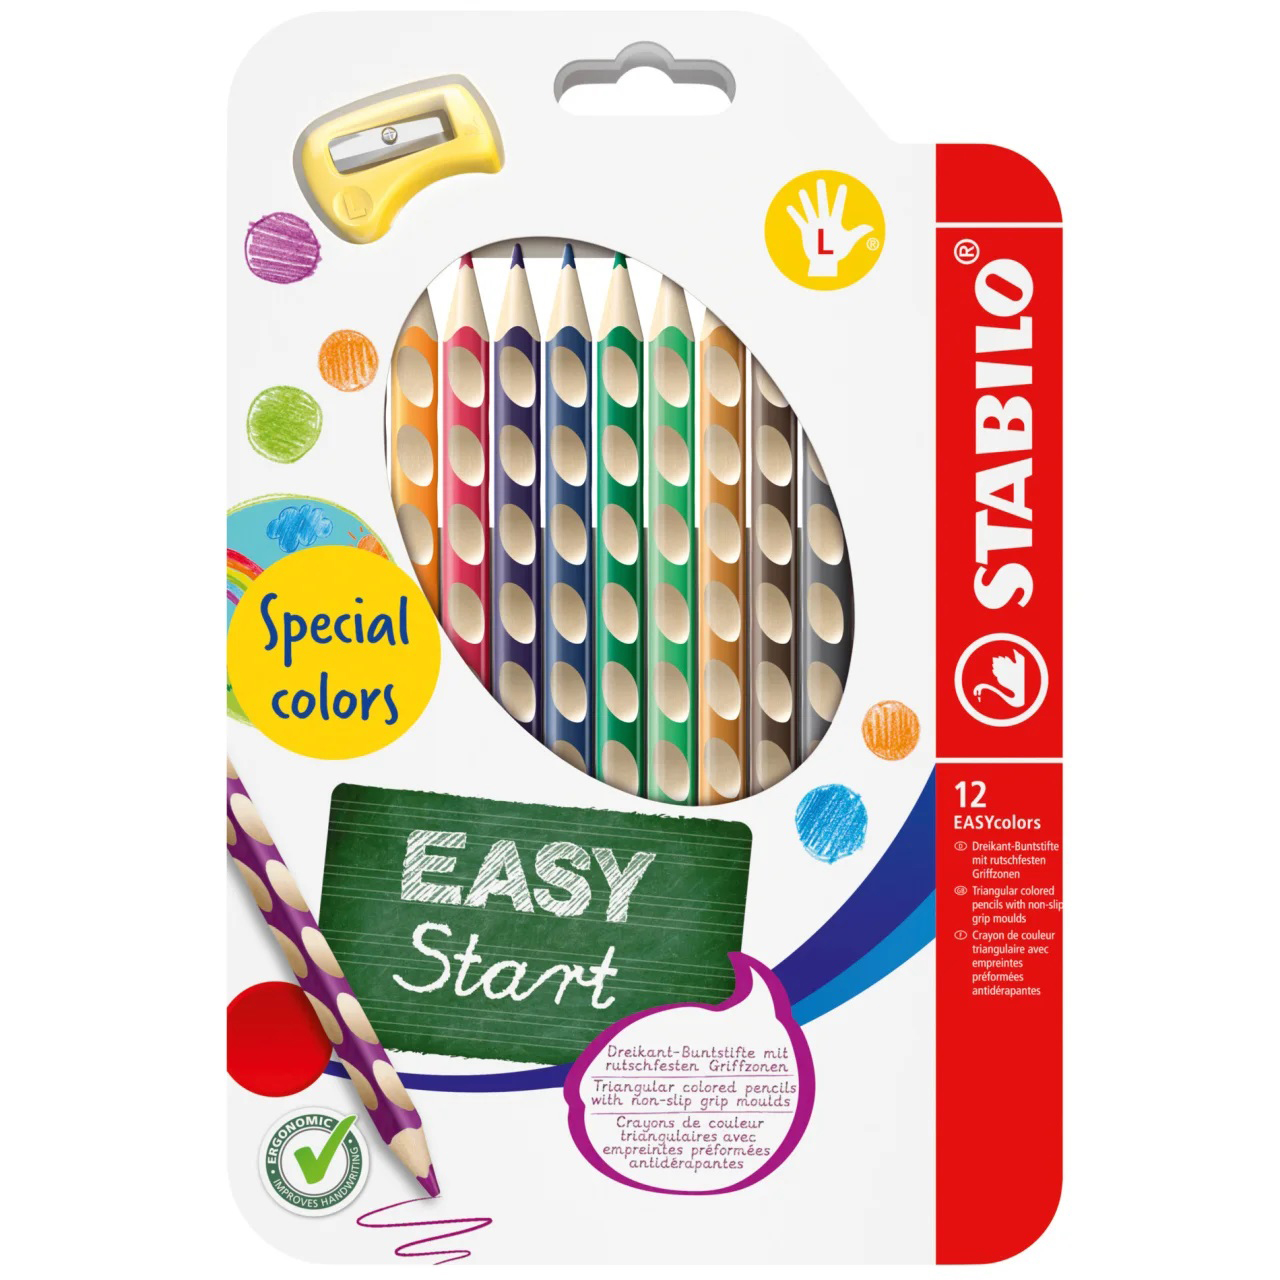 Stabilo-easycolors-12er-Set-Linkshaender-Special-colors-331121-online-kaufen-erweiterung-Buntstift-Farben-lafueliki